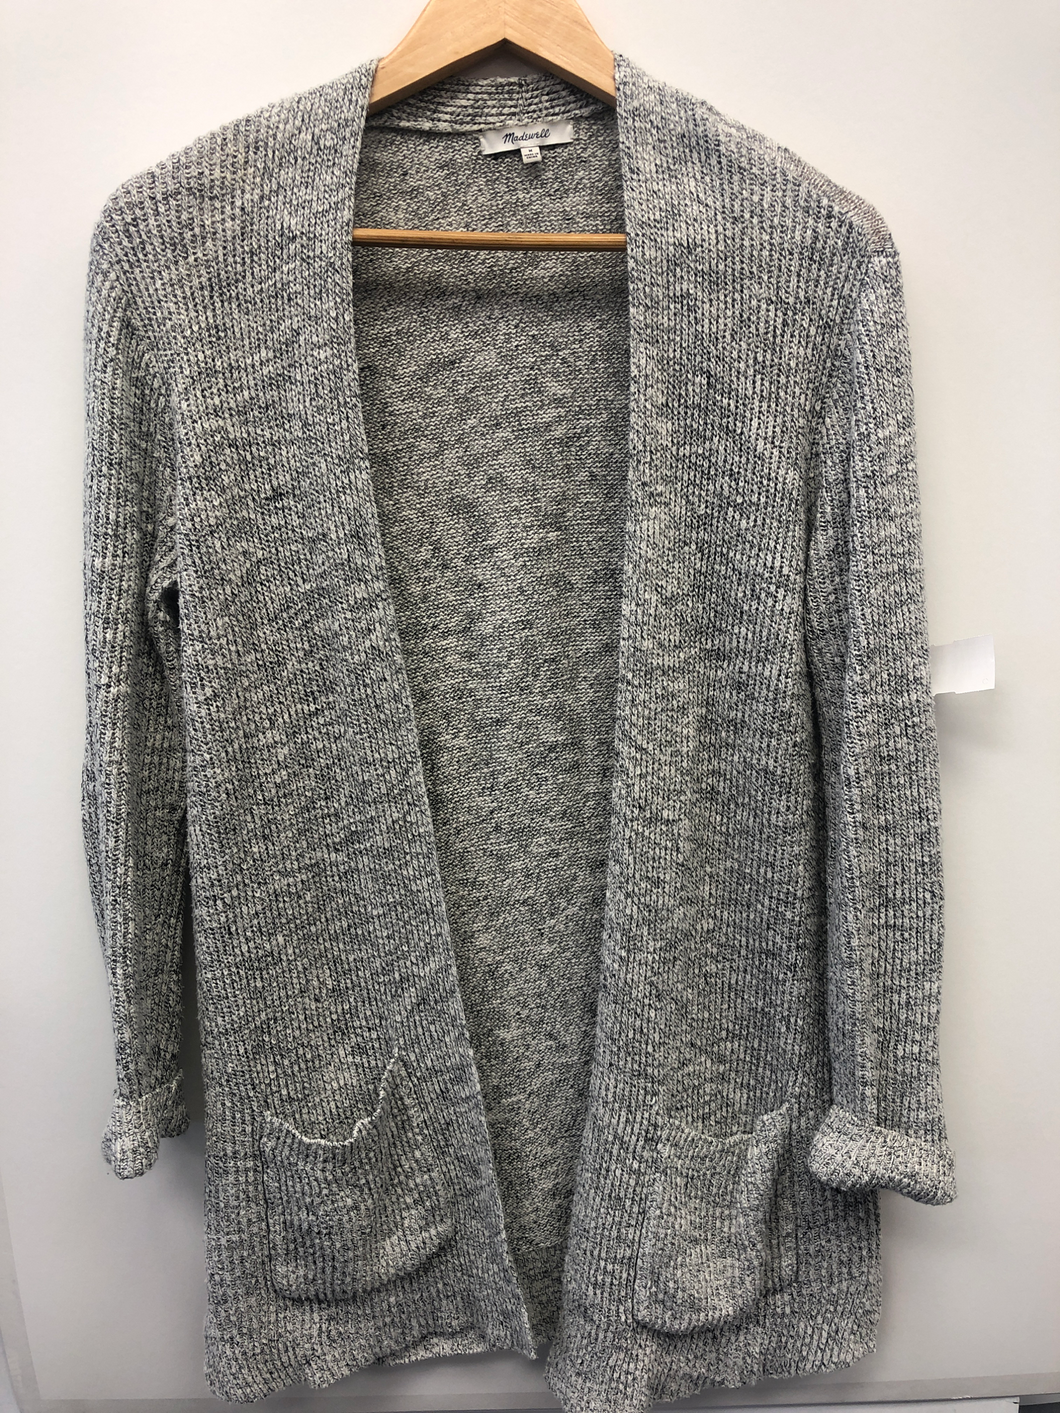 Madewell Sweater Size Medium